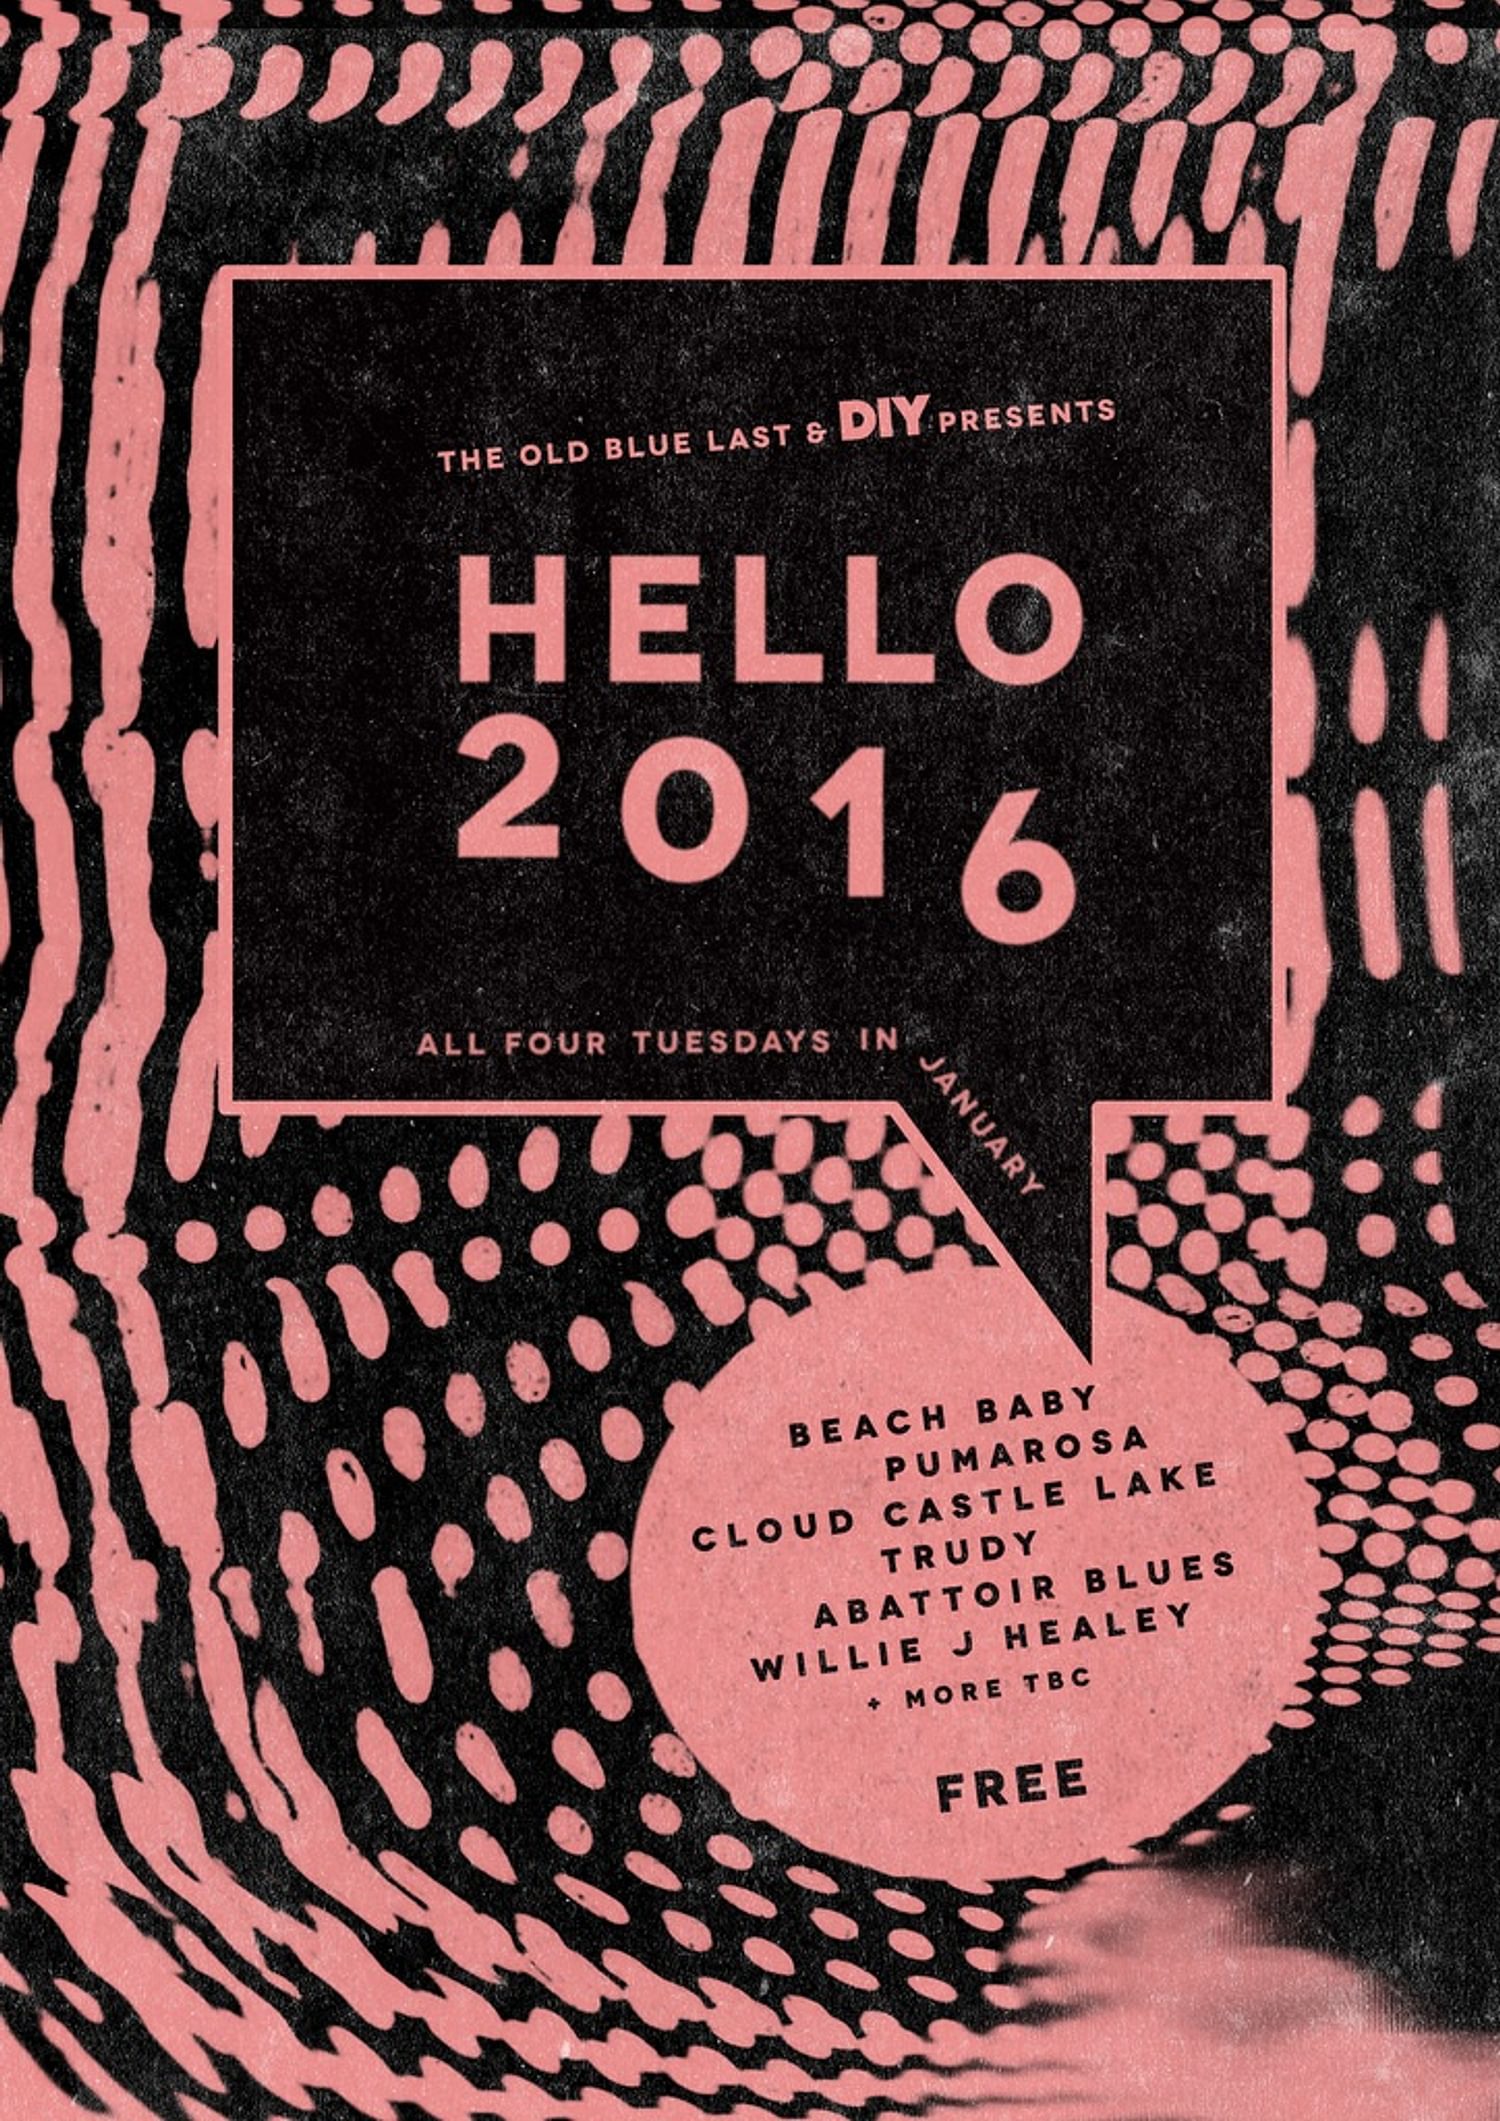 Beach Baby, Pumarosa, Willie J Healey to play DIY Presents’ Hello 2016